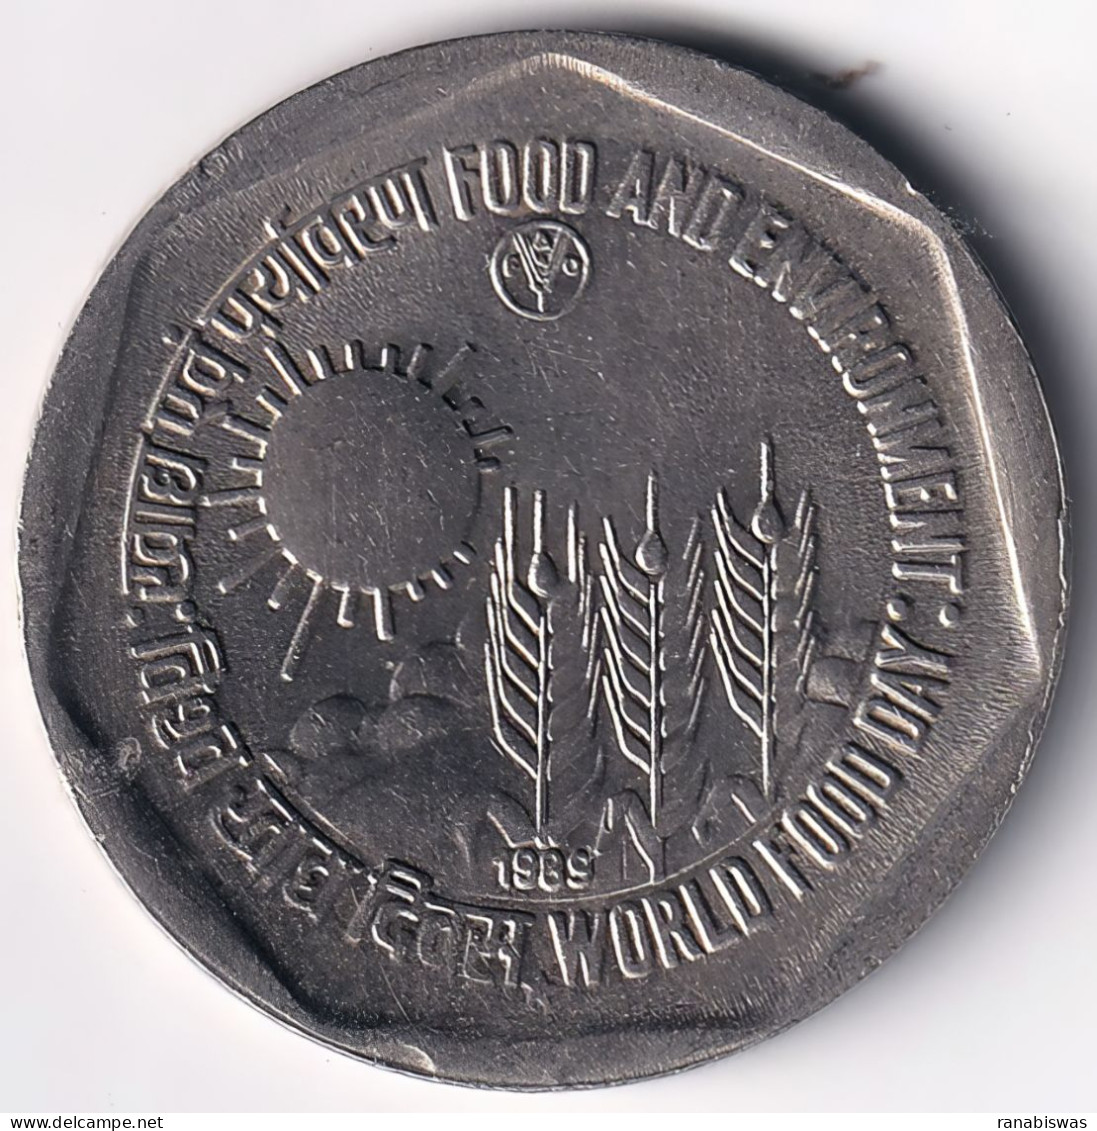 INDIA COIN LOT 5, 1 RUPEE 1989, FAO, HYDERABAD MINT, XF, SACRE - India